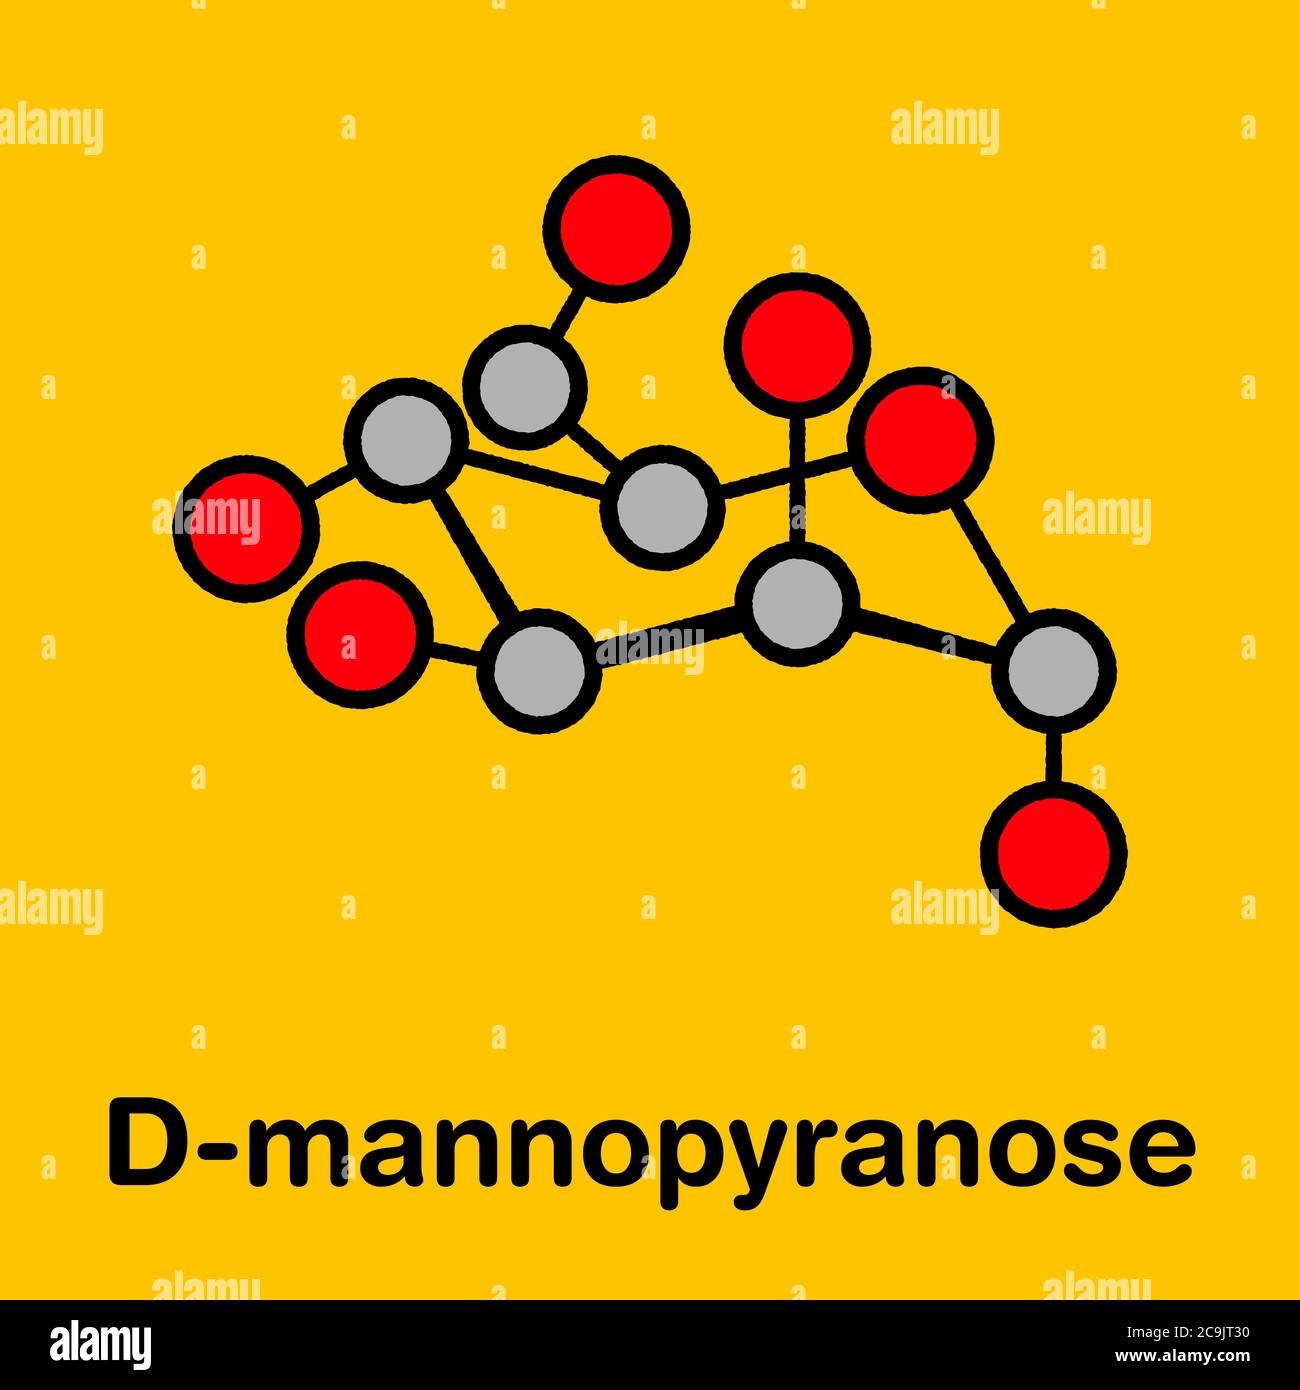 mannopyranose